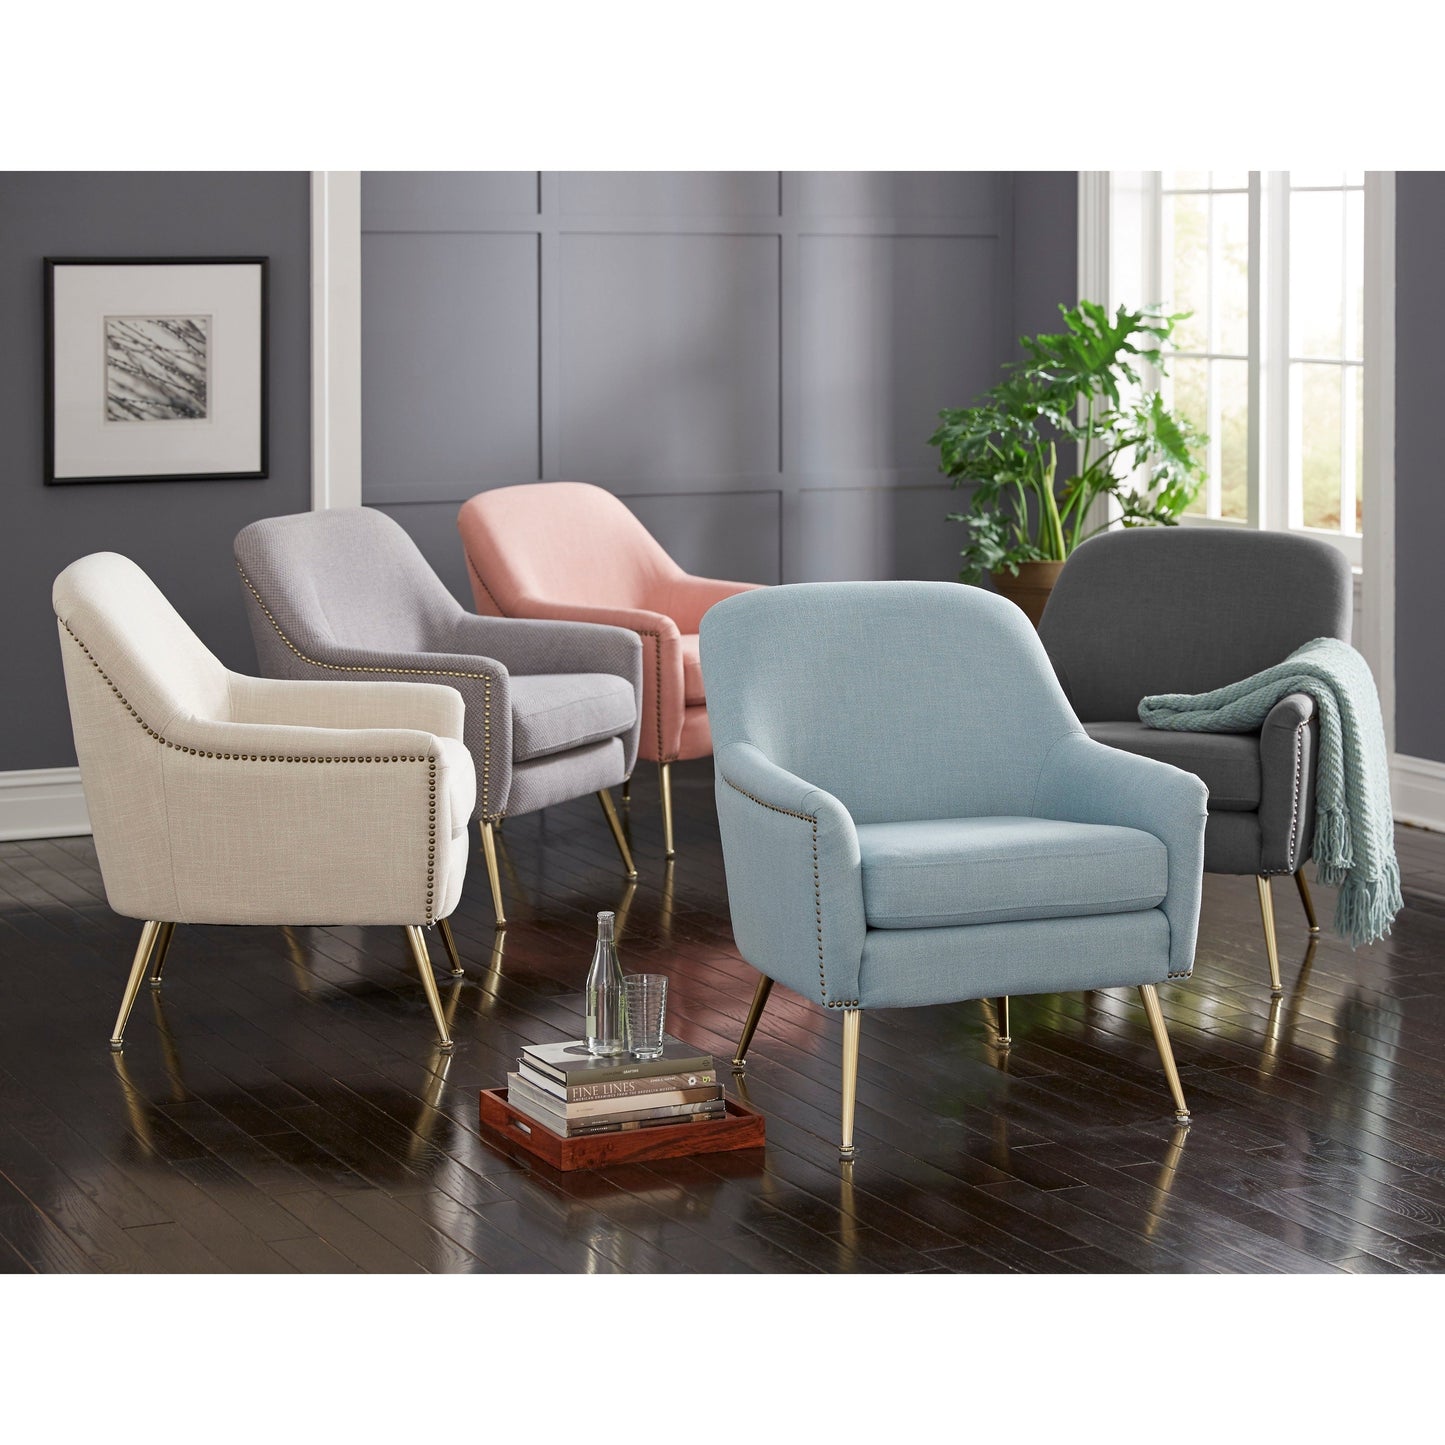 Upholstered Chair - Vita in rose